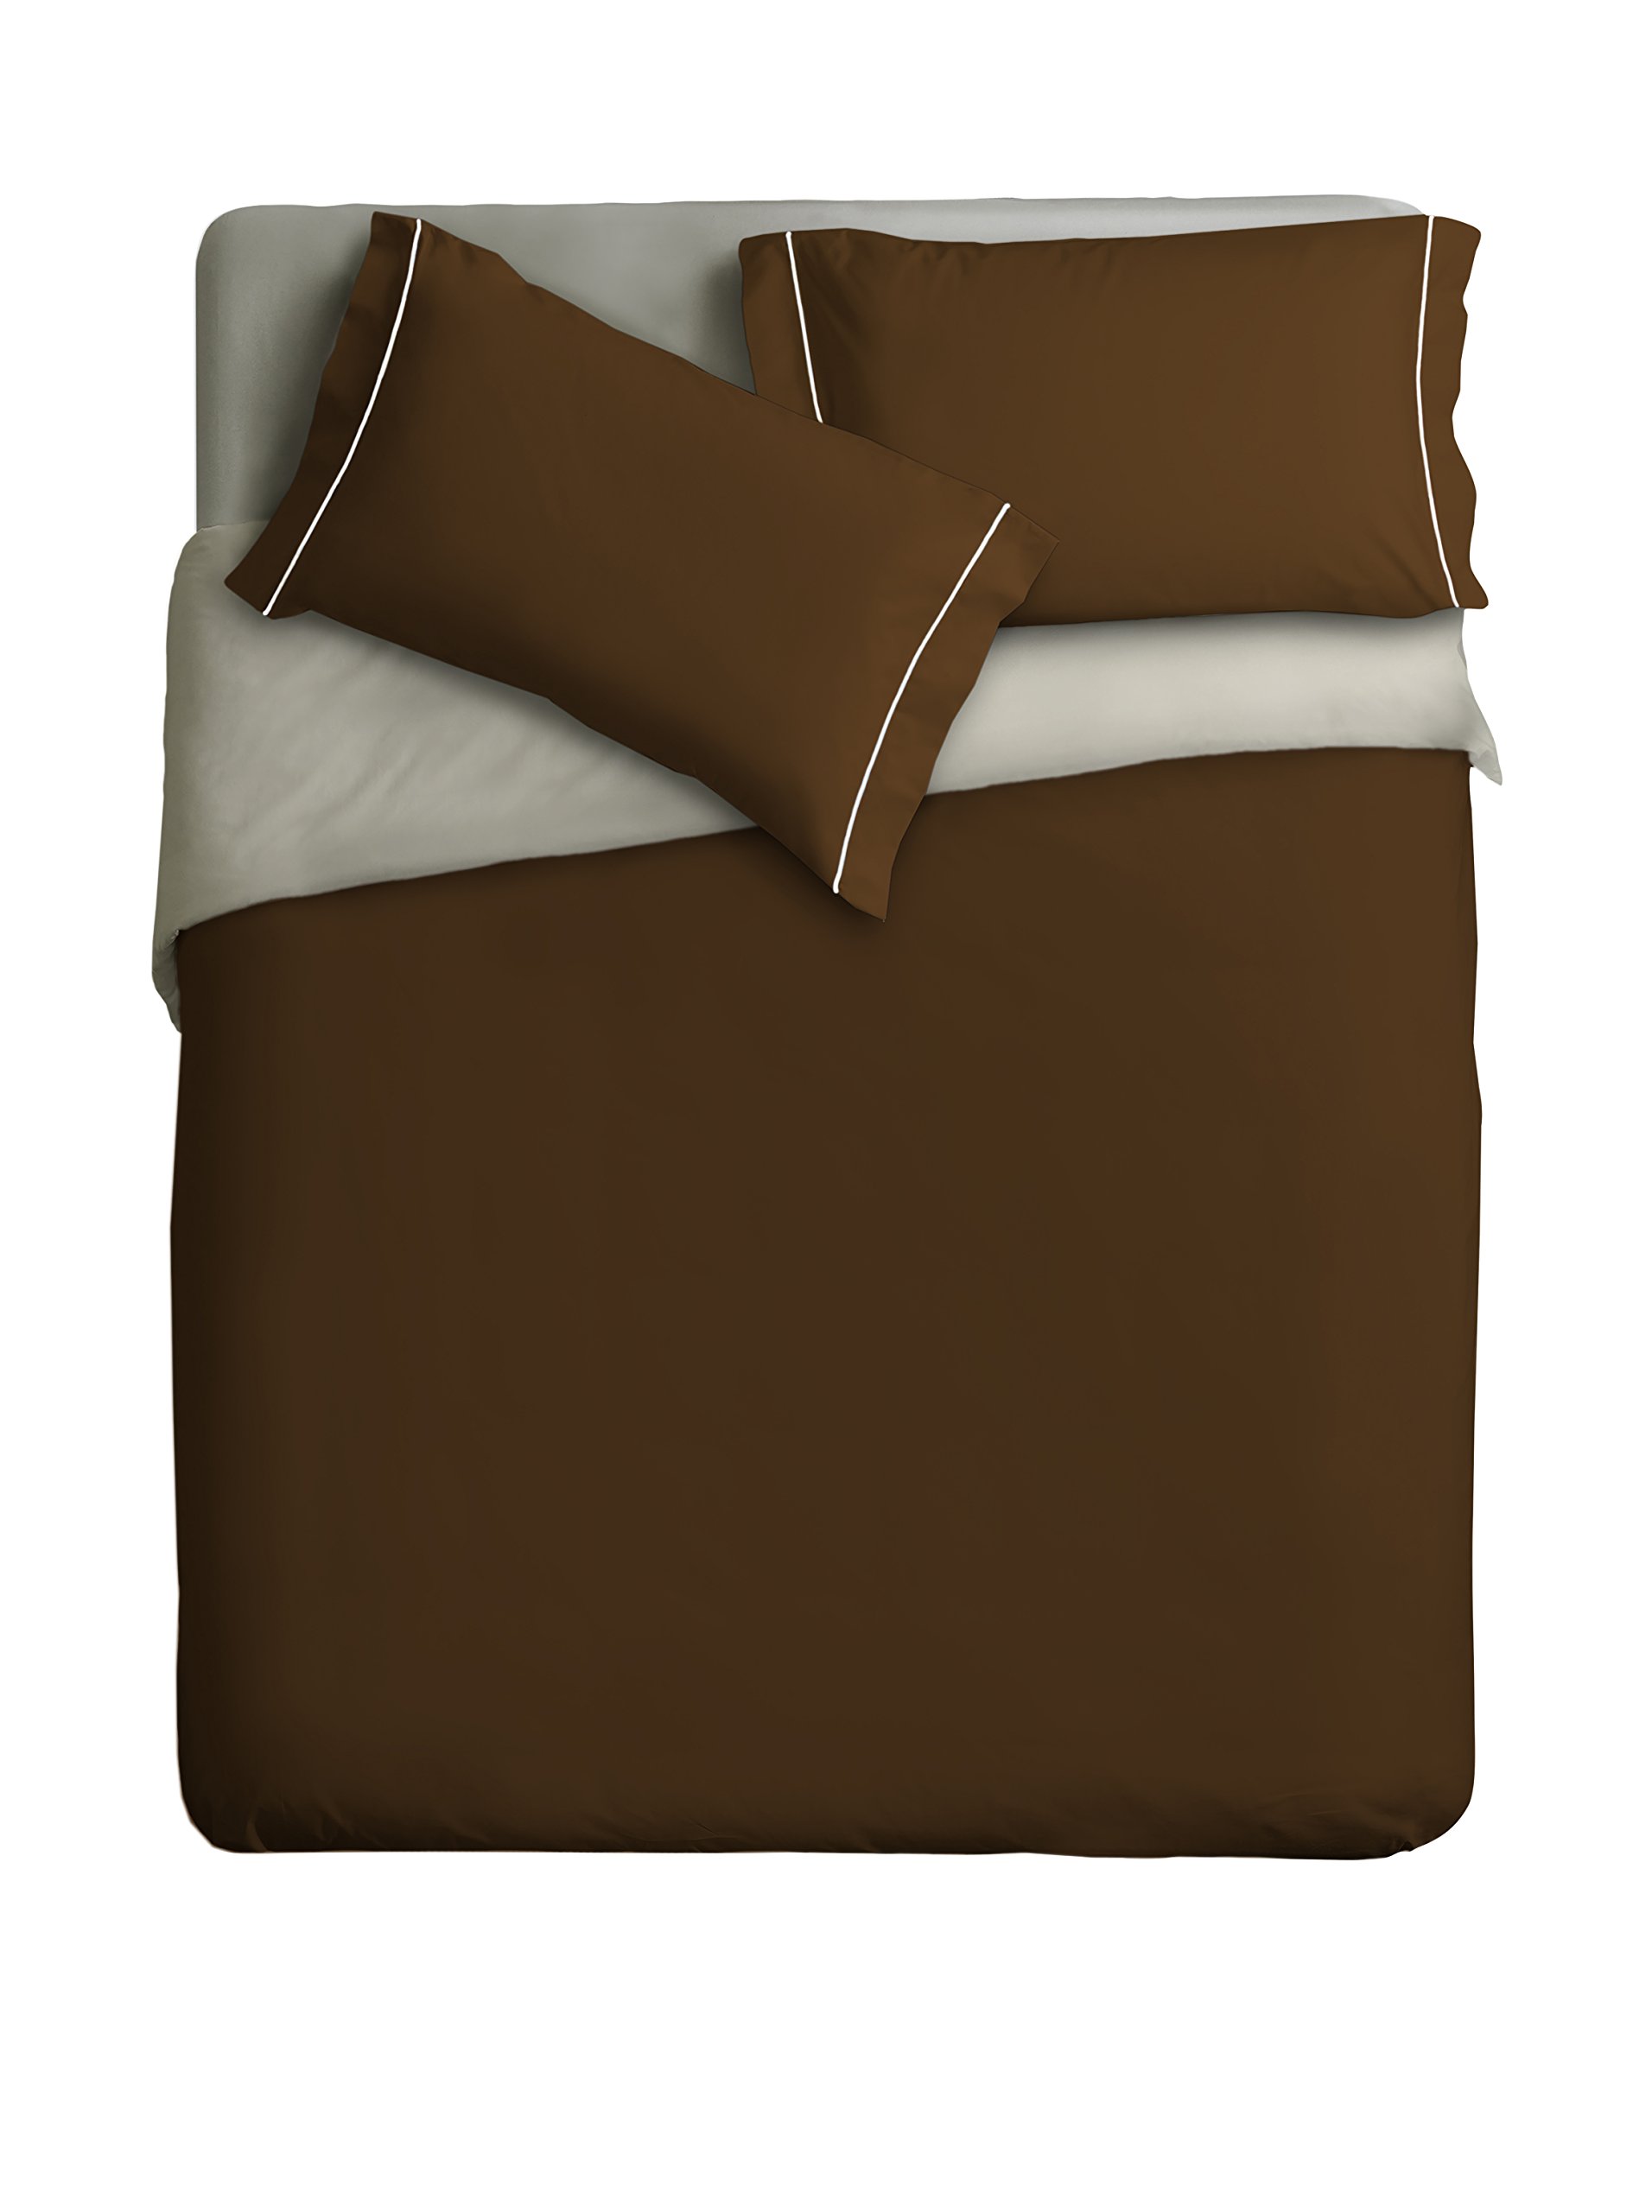 Ipersan zweifarbig Bettbezug Kaffee/beige cm. 255x240